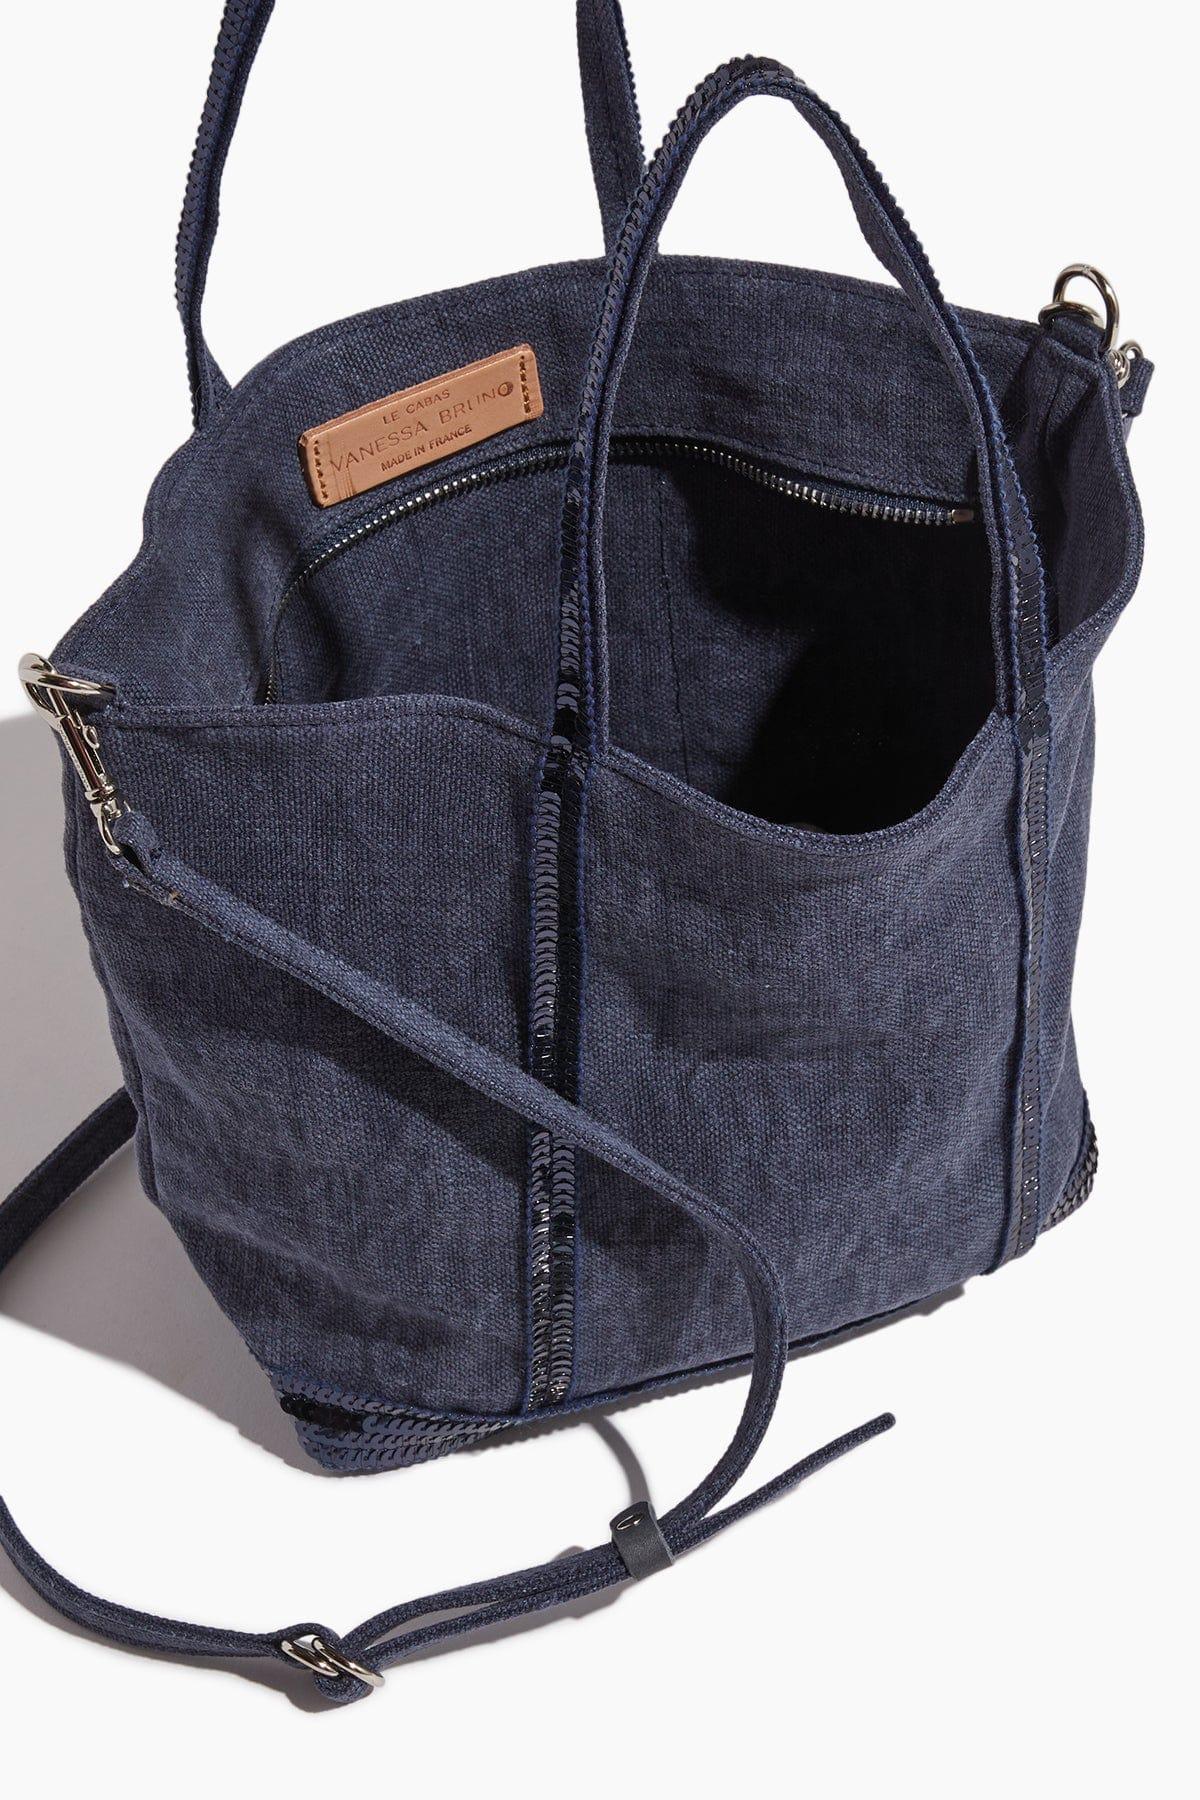 Linen L Cabas Tote Zipped Shoulder Bag Sable , Vanessa Bruno